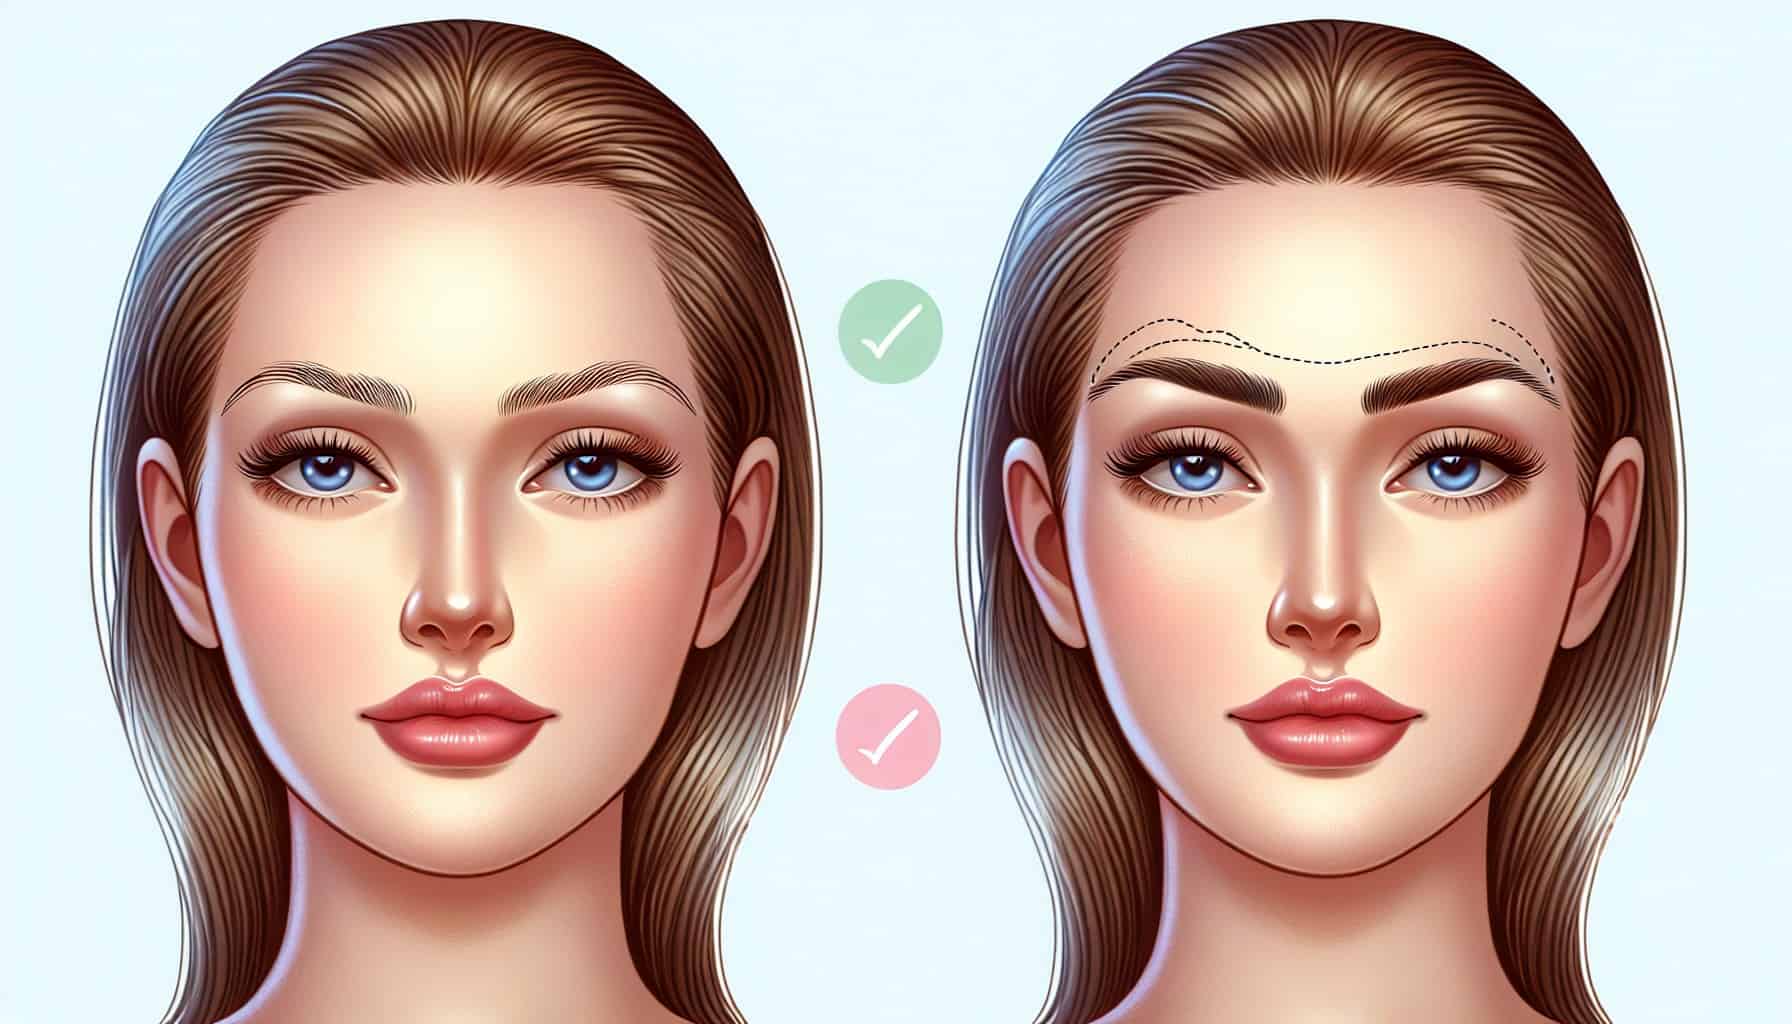 Illustration of Botox injection on eyebrow area